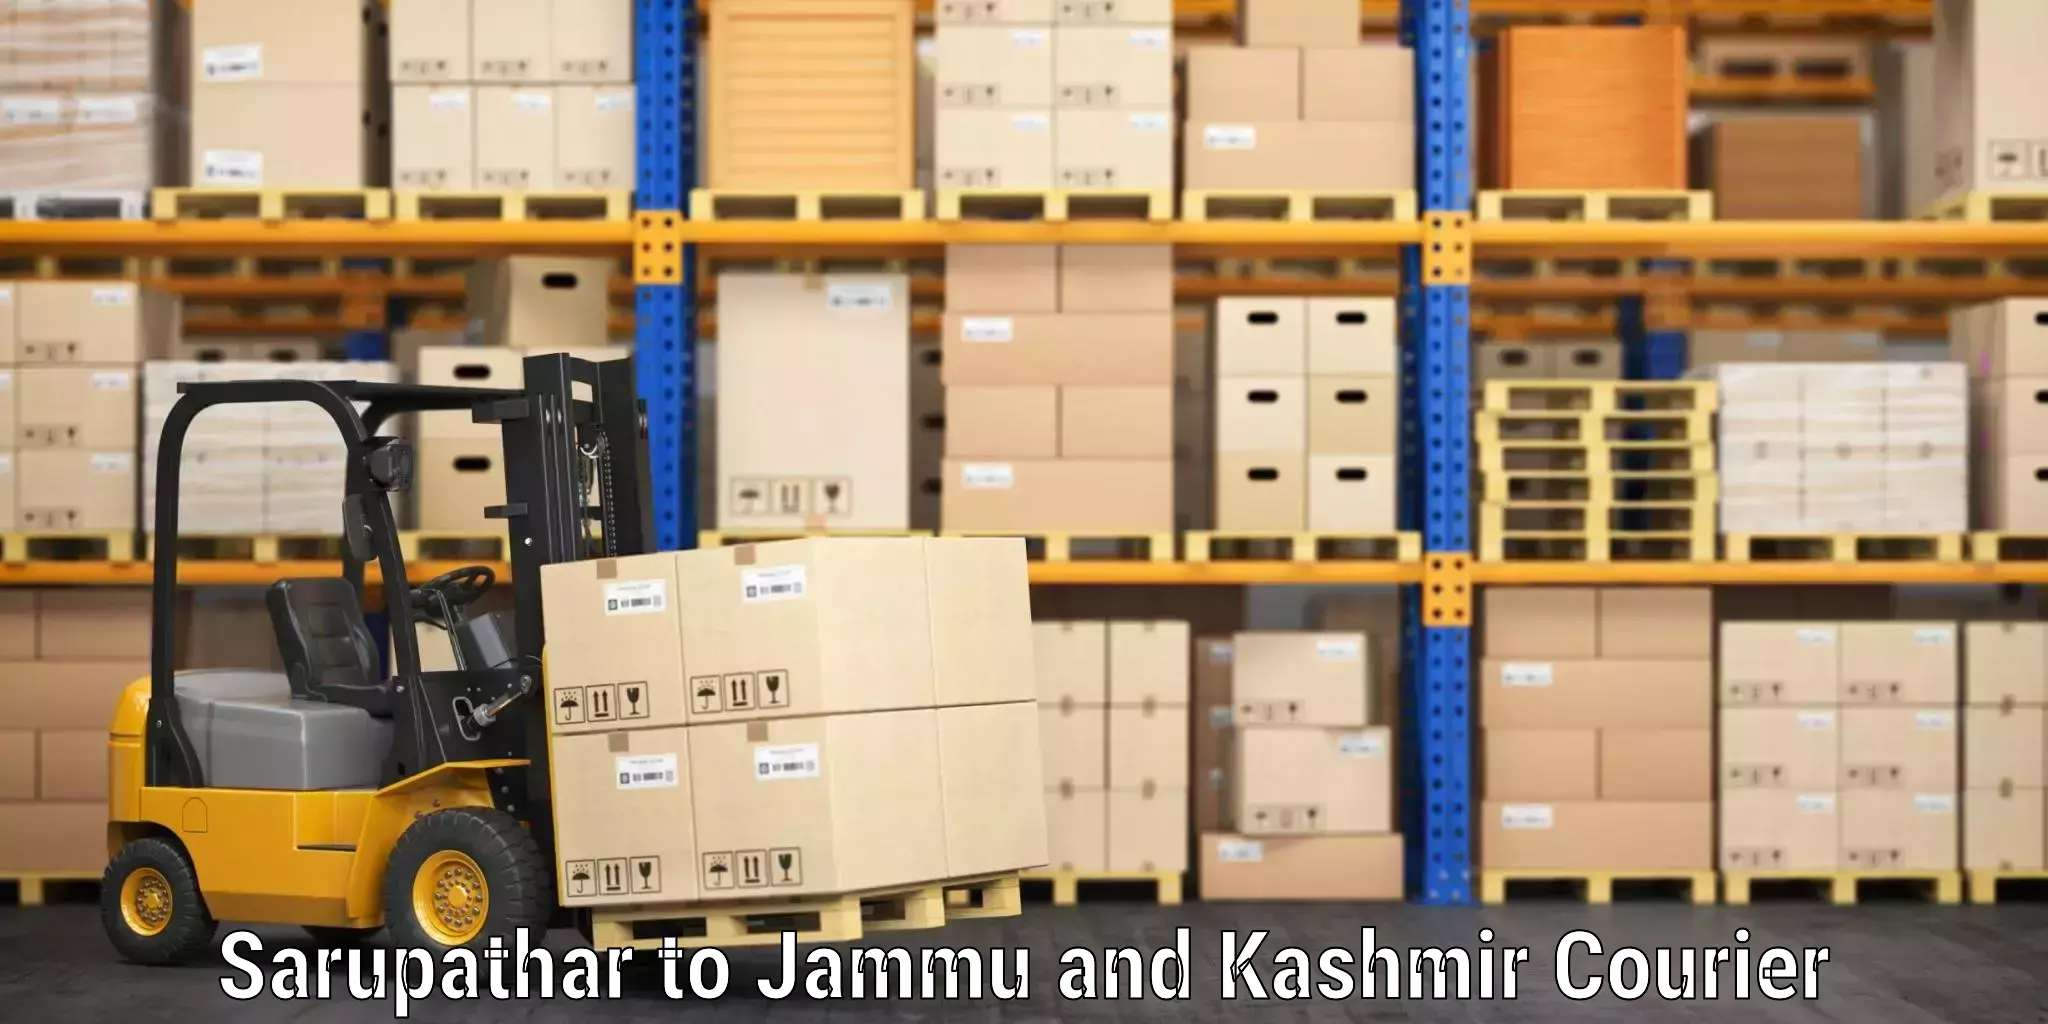 Baggage transport technology Sarupathar to Jammu and Kashmir